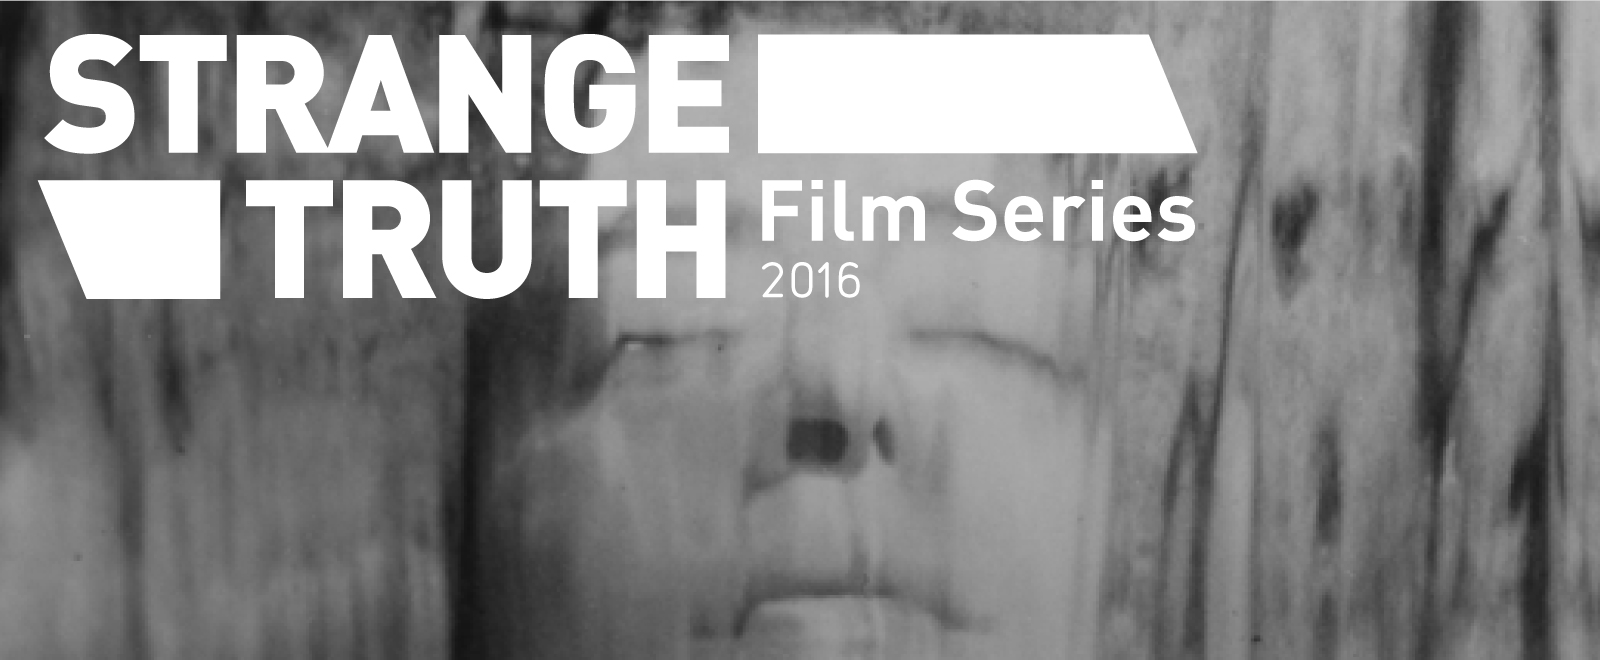 STRANGE TRUTH documentary film series